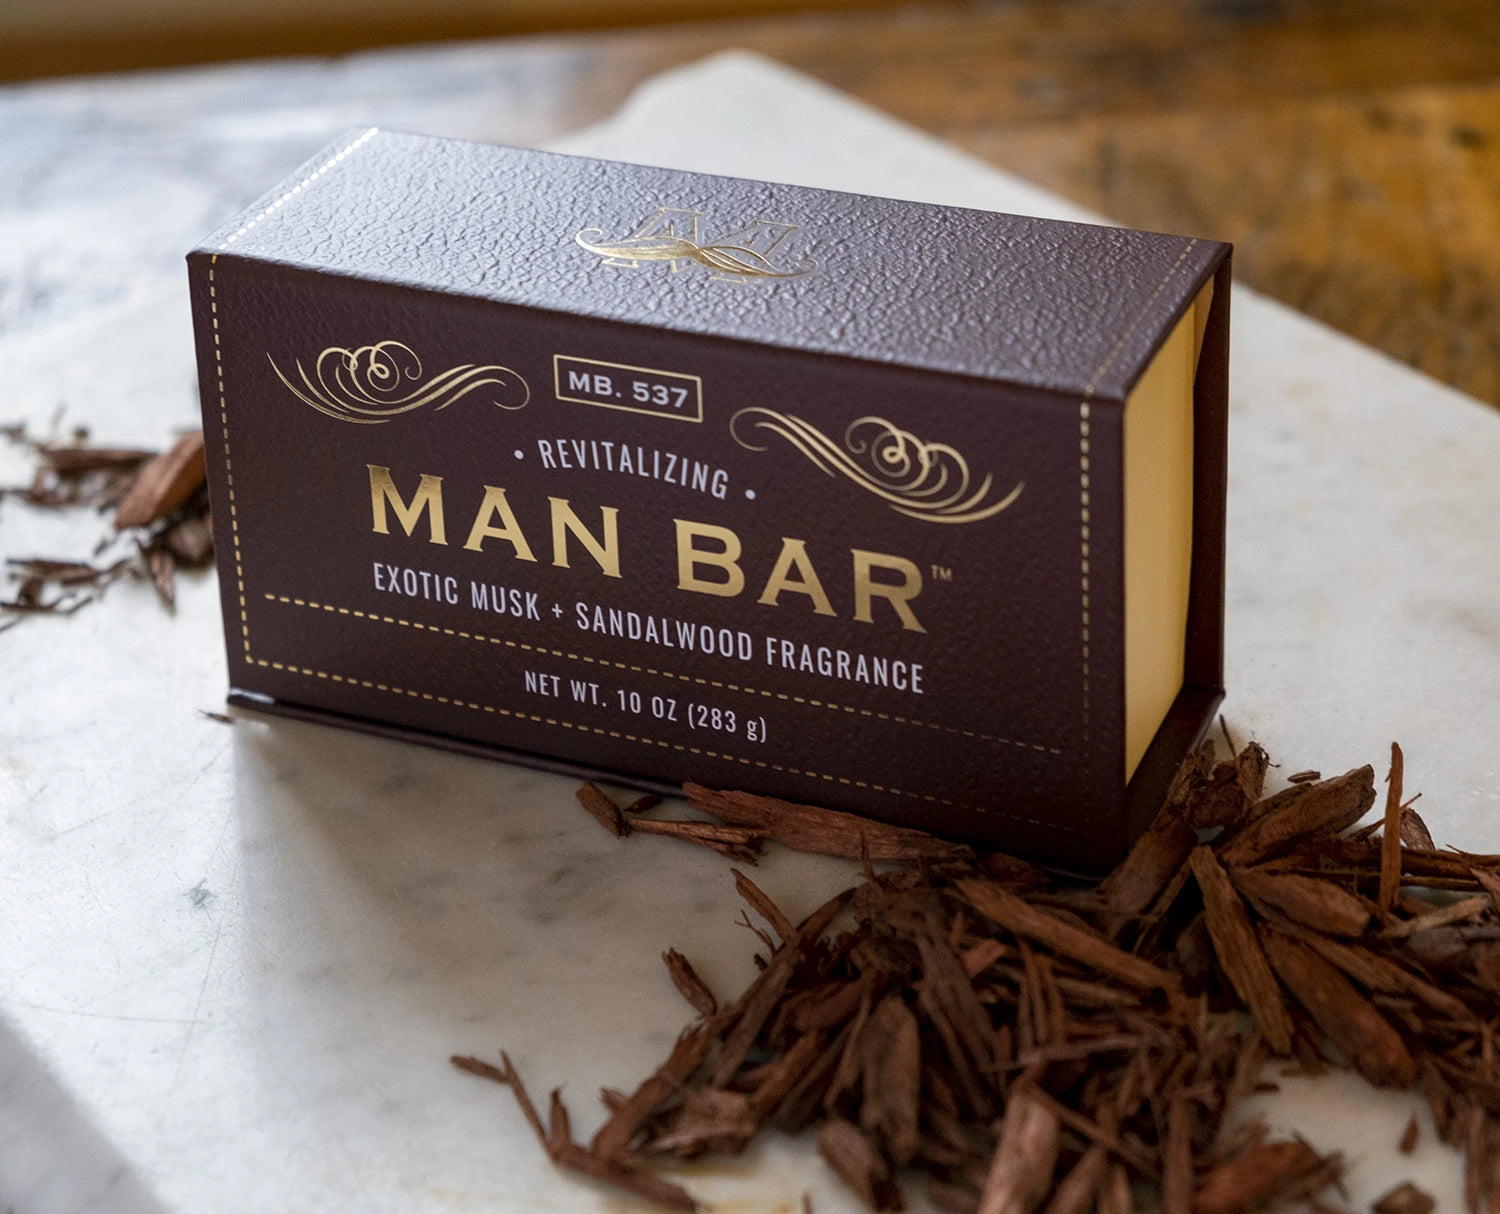 The Man Bar